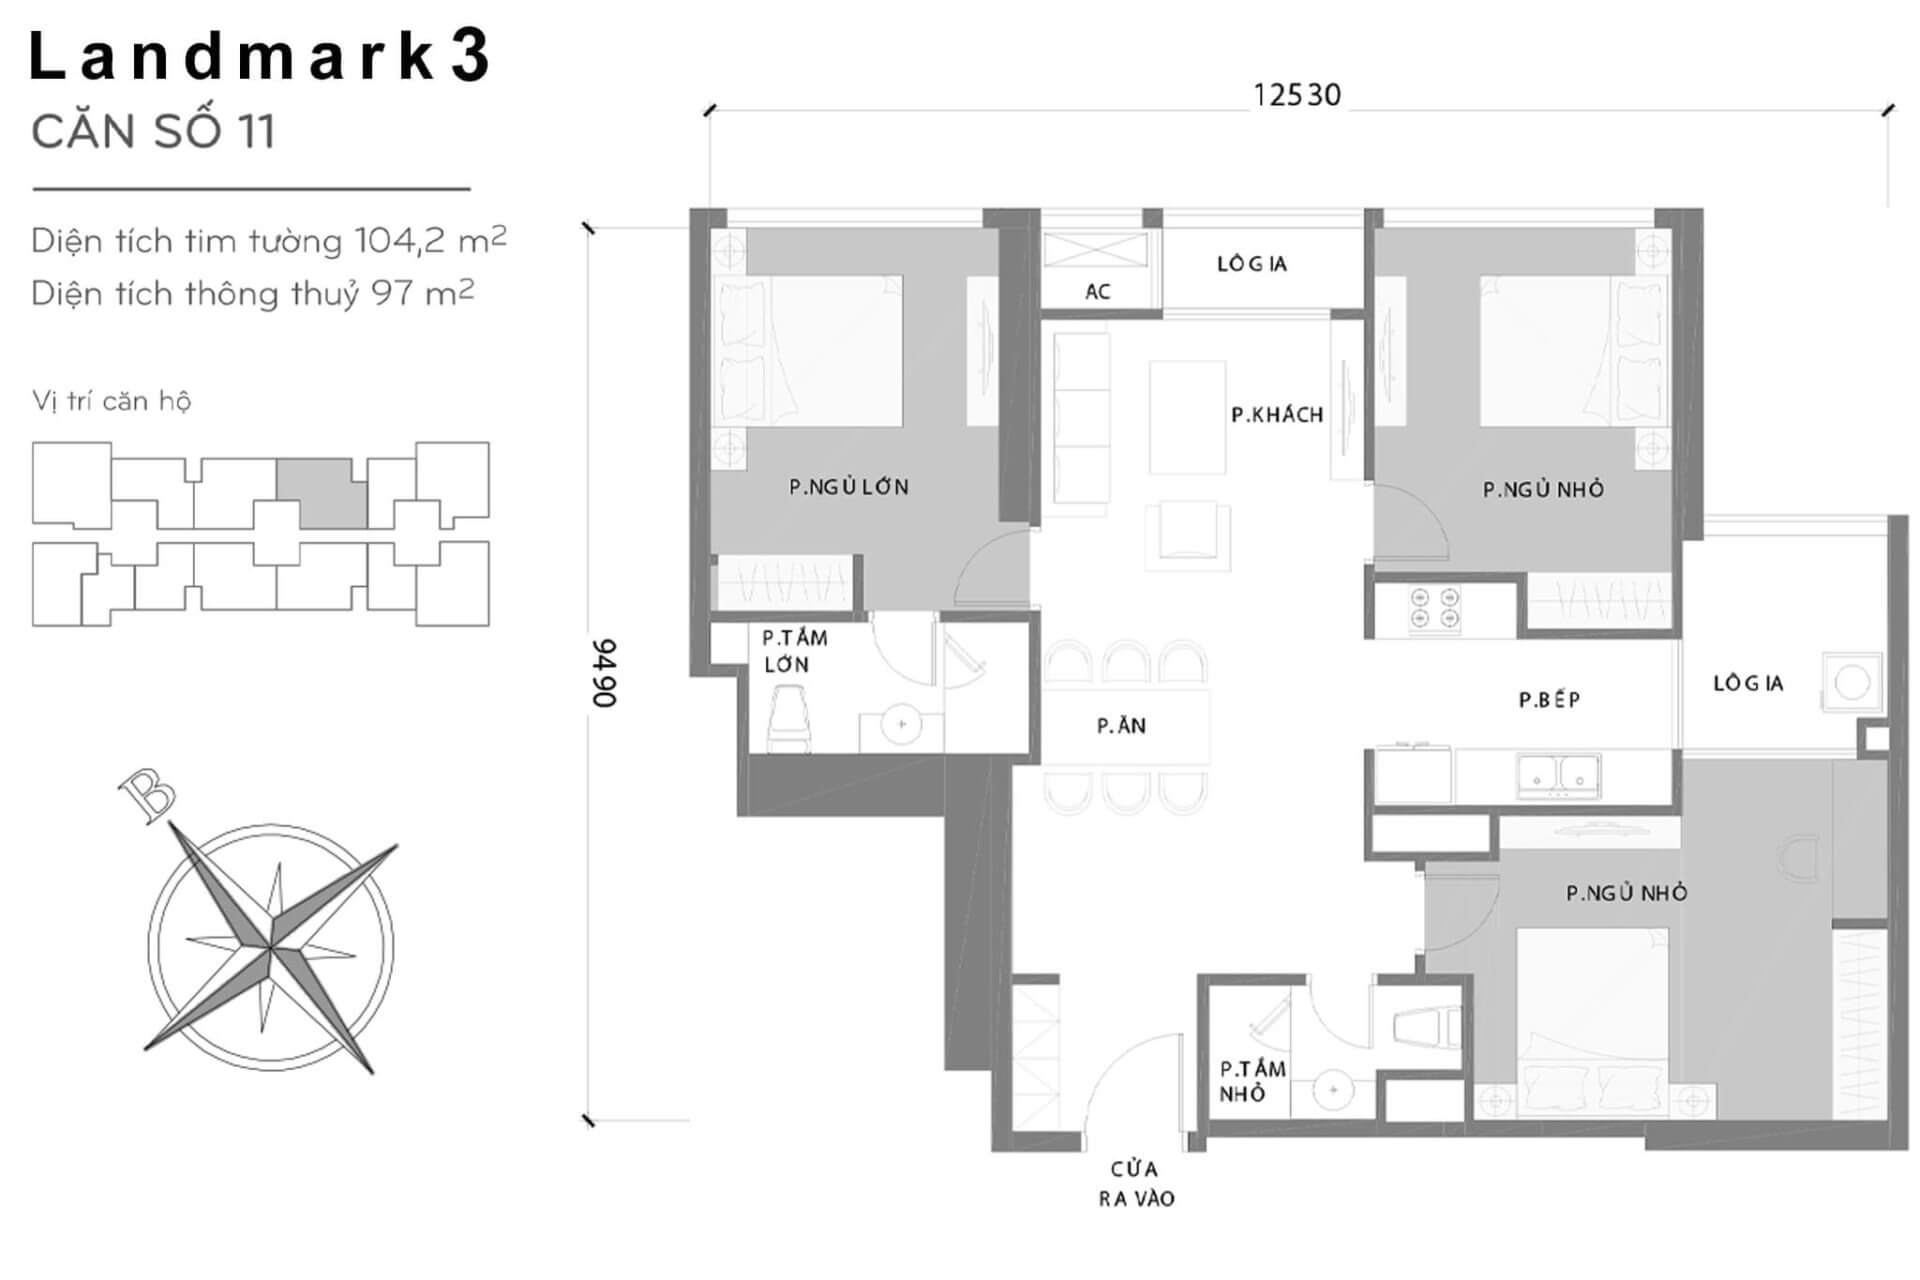 layout căn hộ số 11 Landmark 3 L3-11